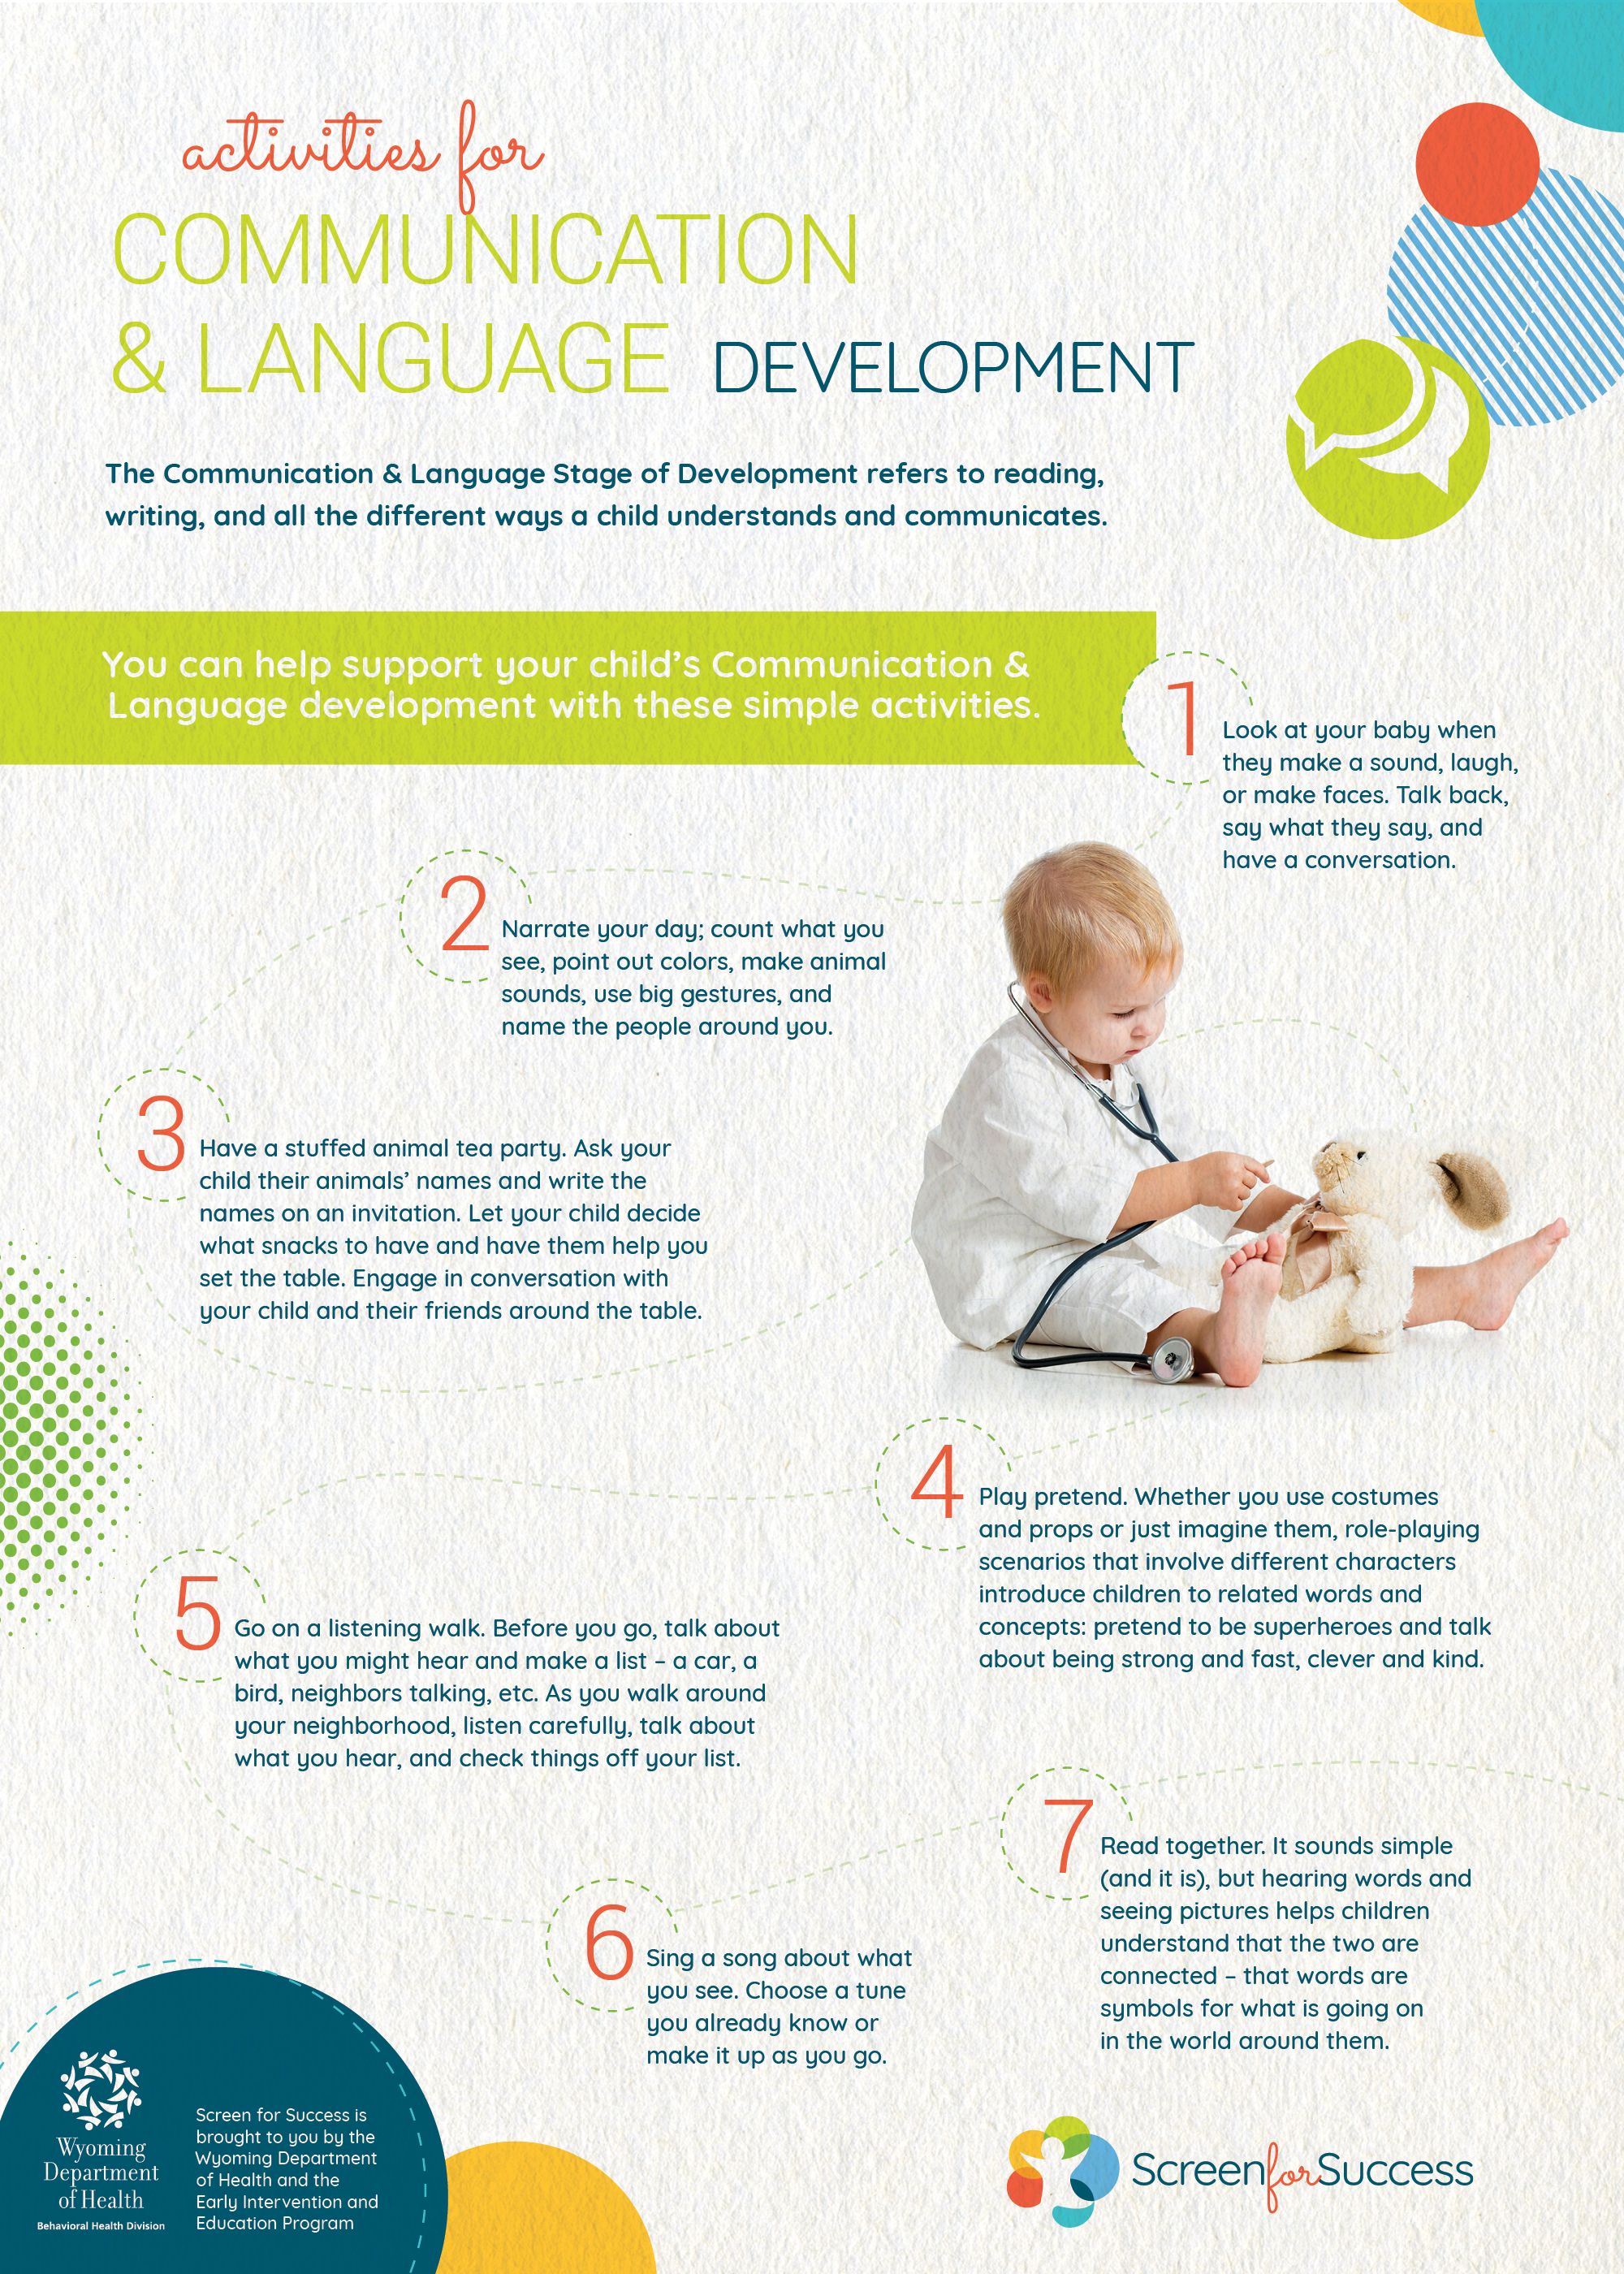 Activities for Communication & Language Development